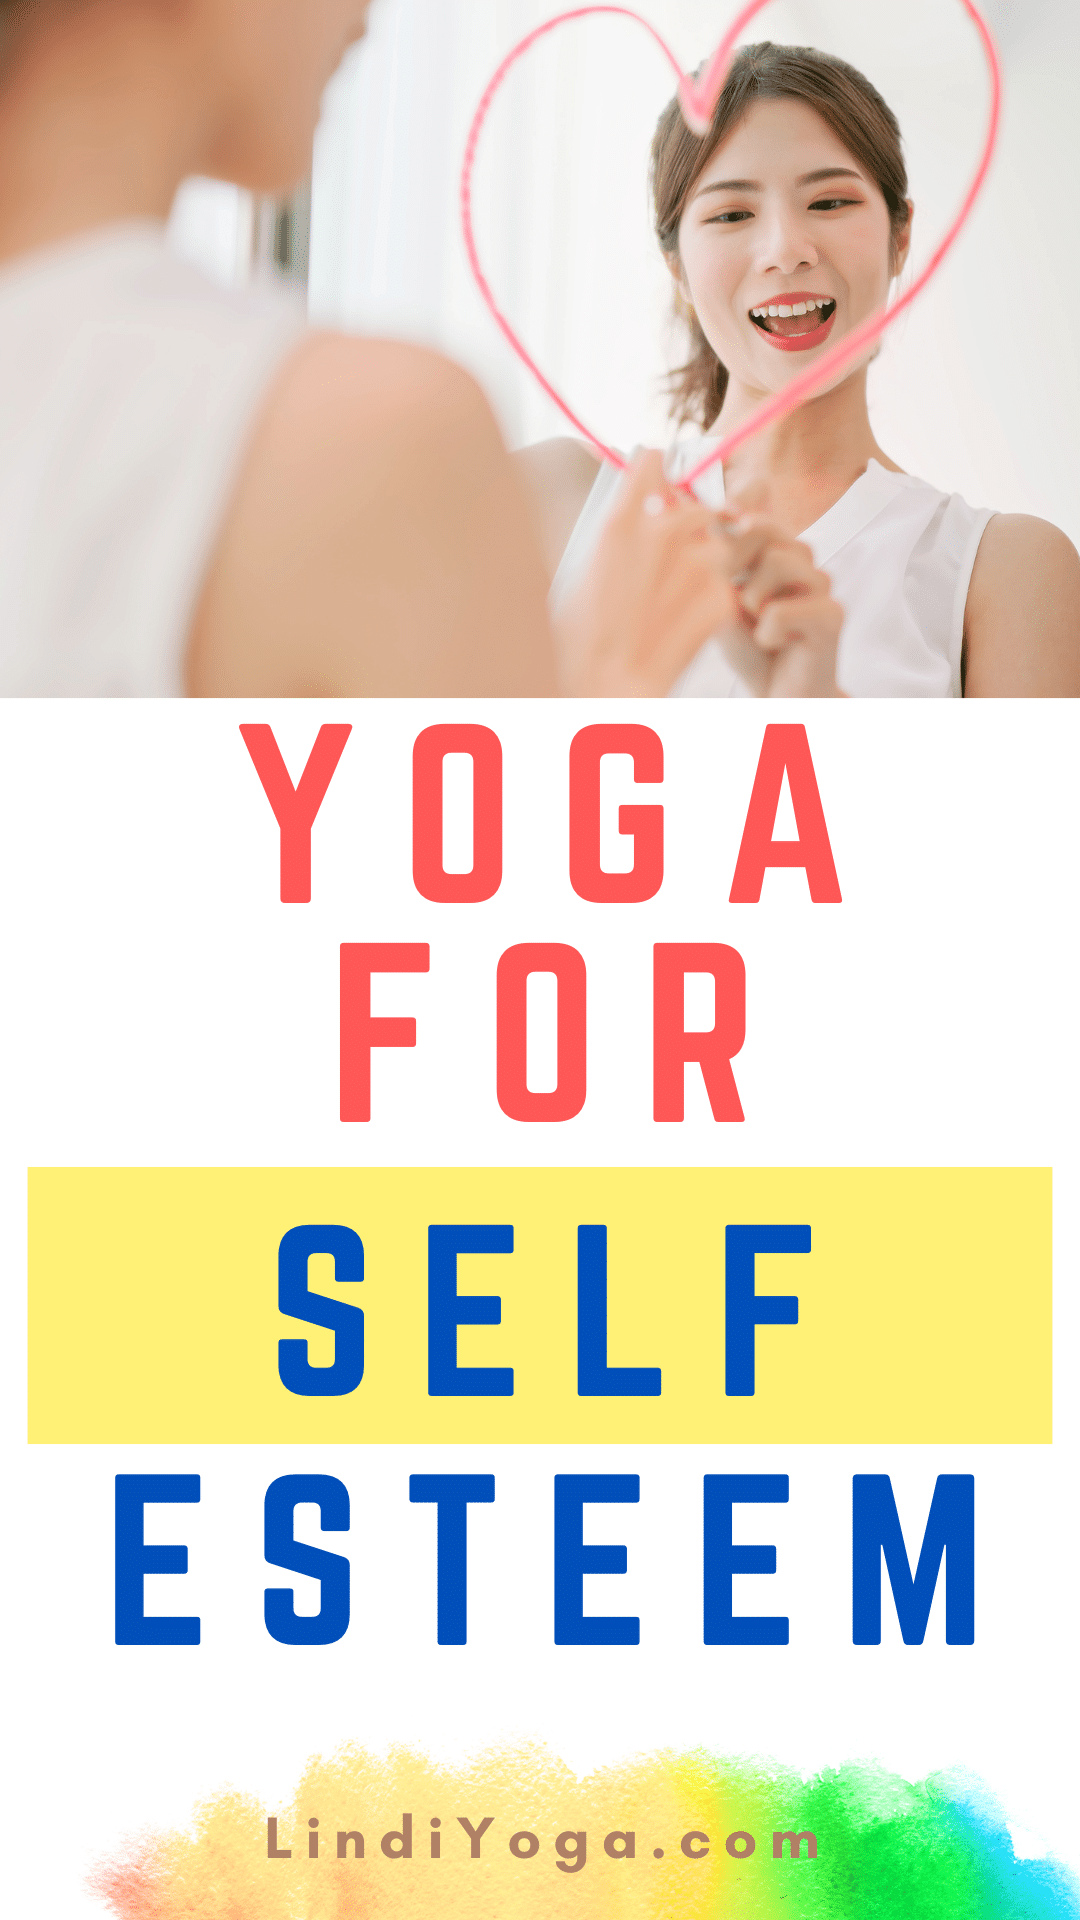 Yoga for Self Esteem / Canva